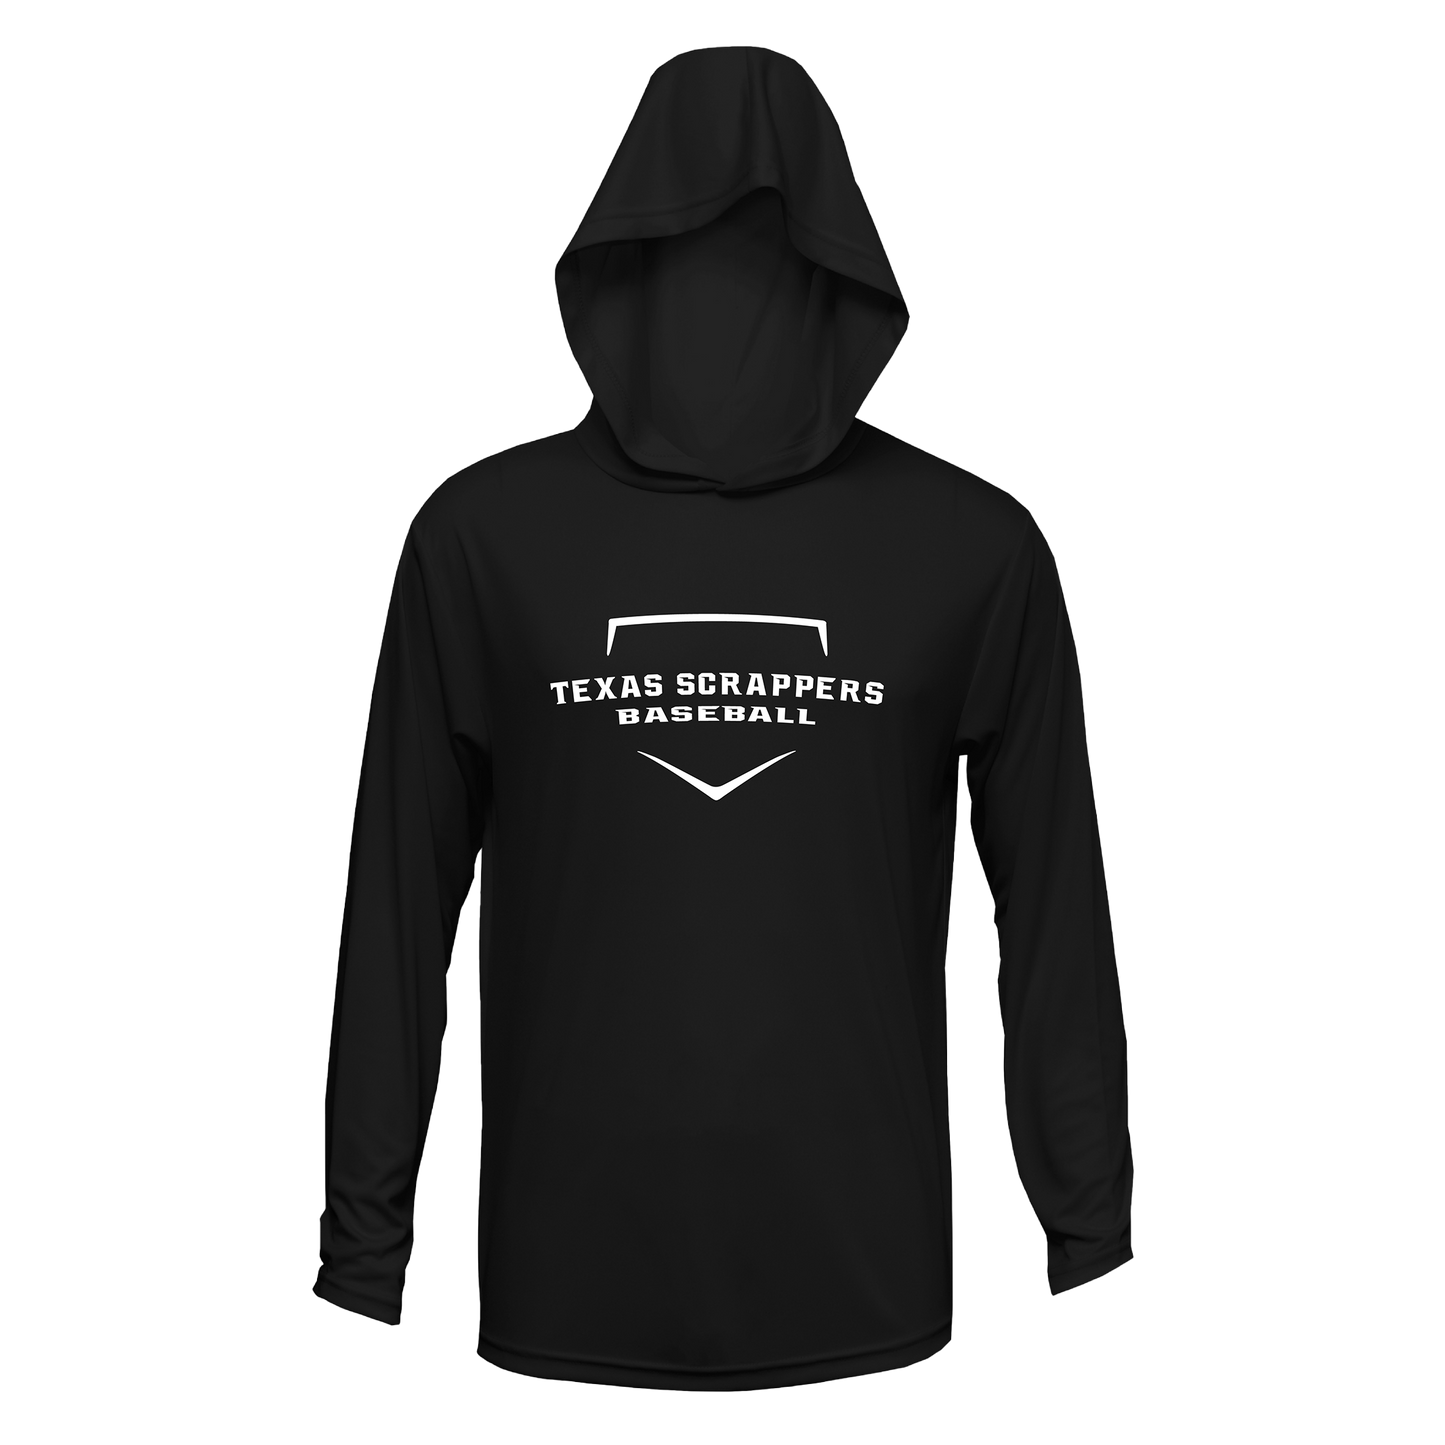 Adult Xtreme-Tek Black Long Sleeve Hoodie W/ White Logo